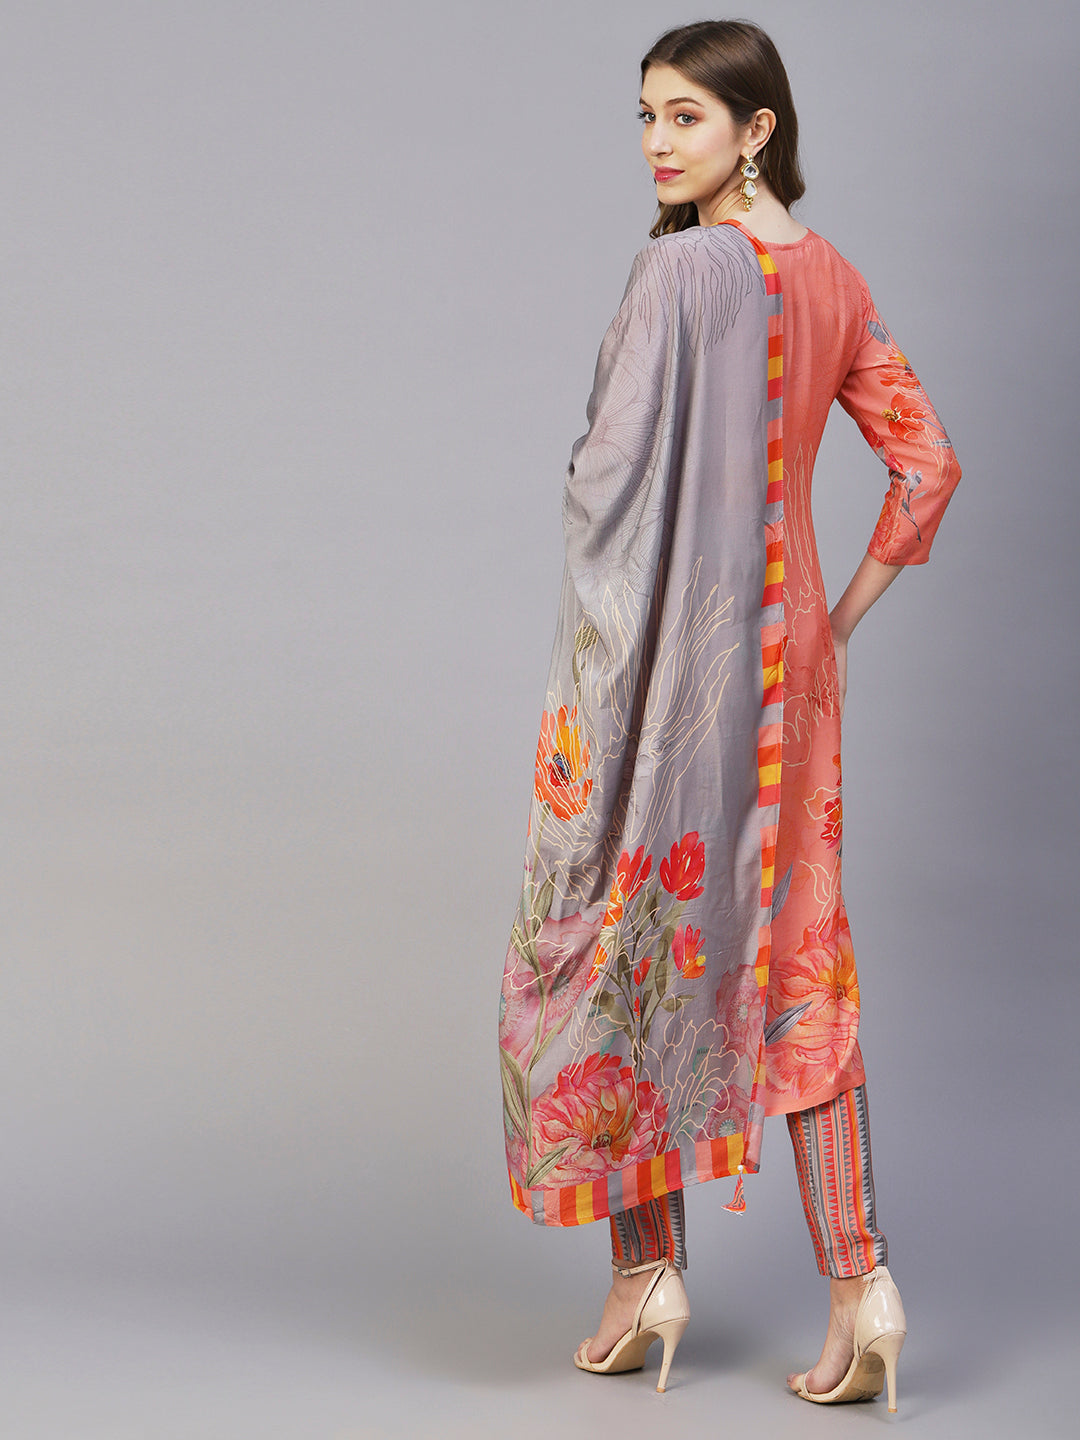 Floral Printed Zari Top Stitched Kurta With Pants & Floral Printed Tasseled Dupatta - Peach